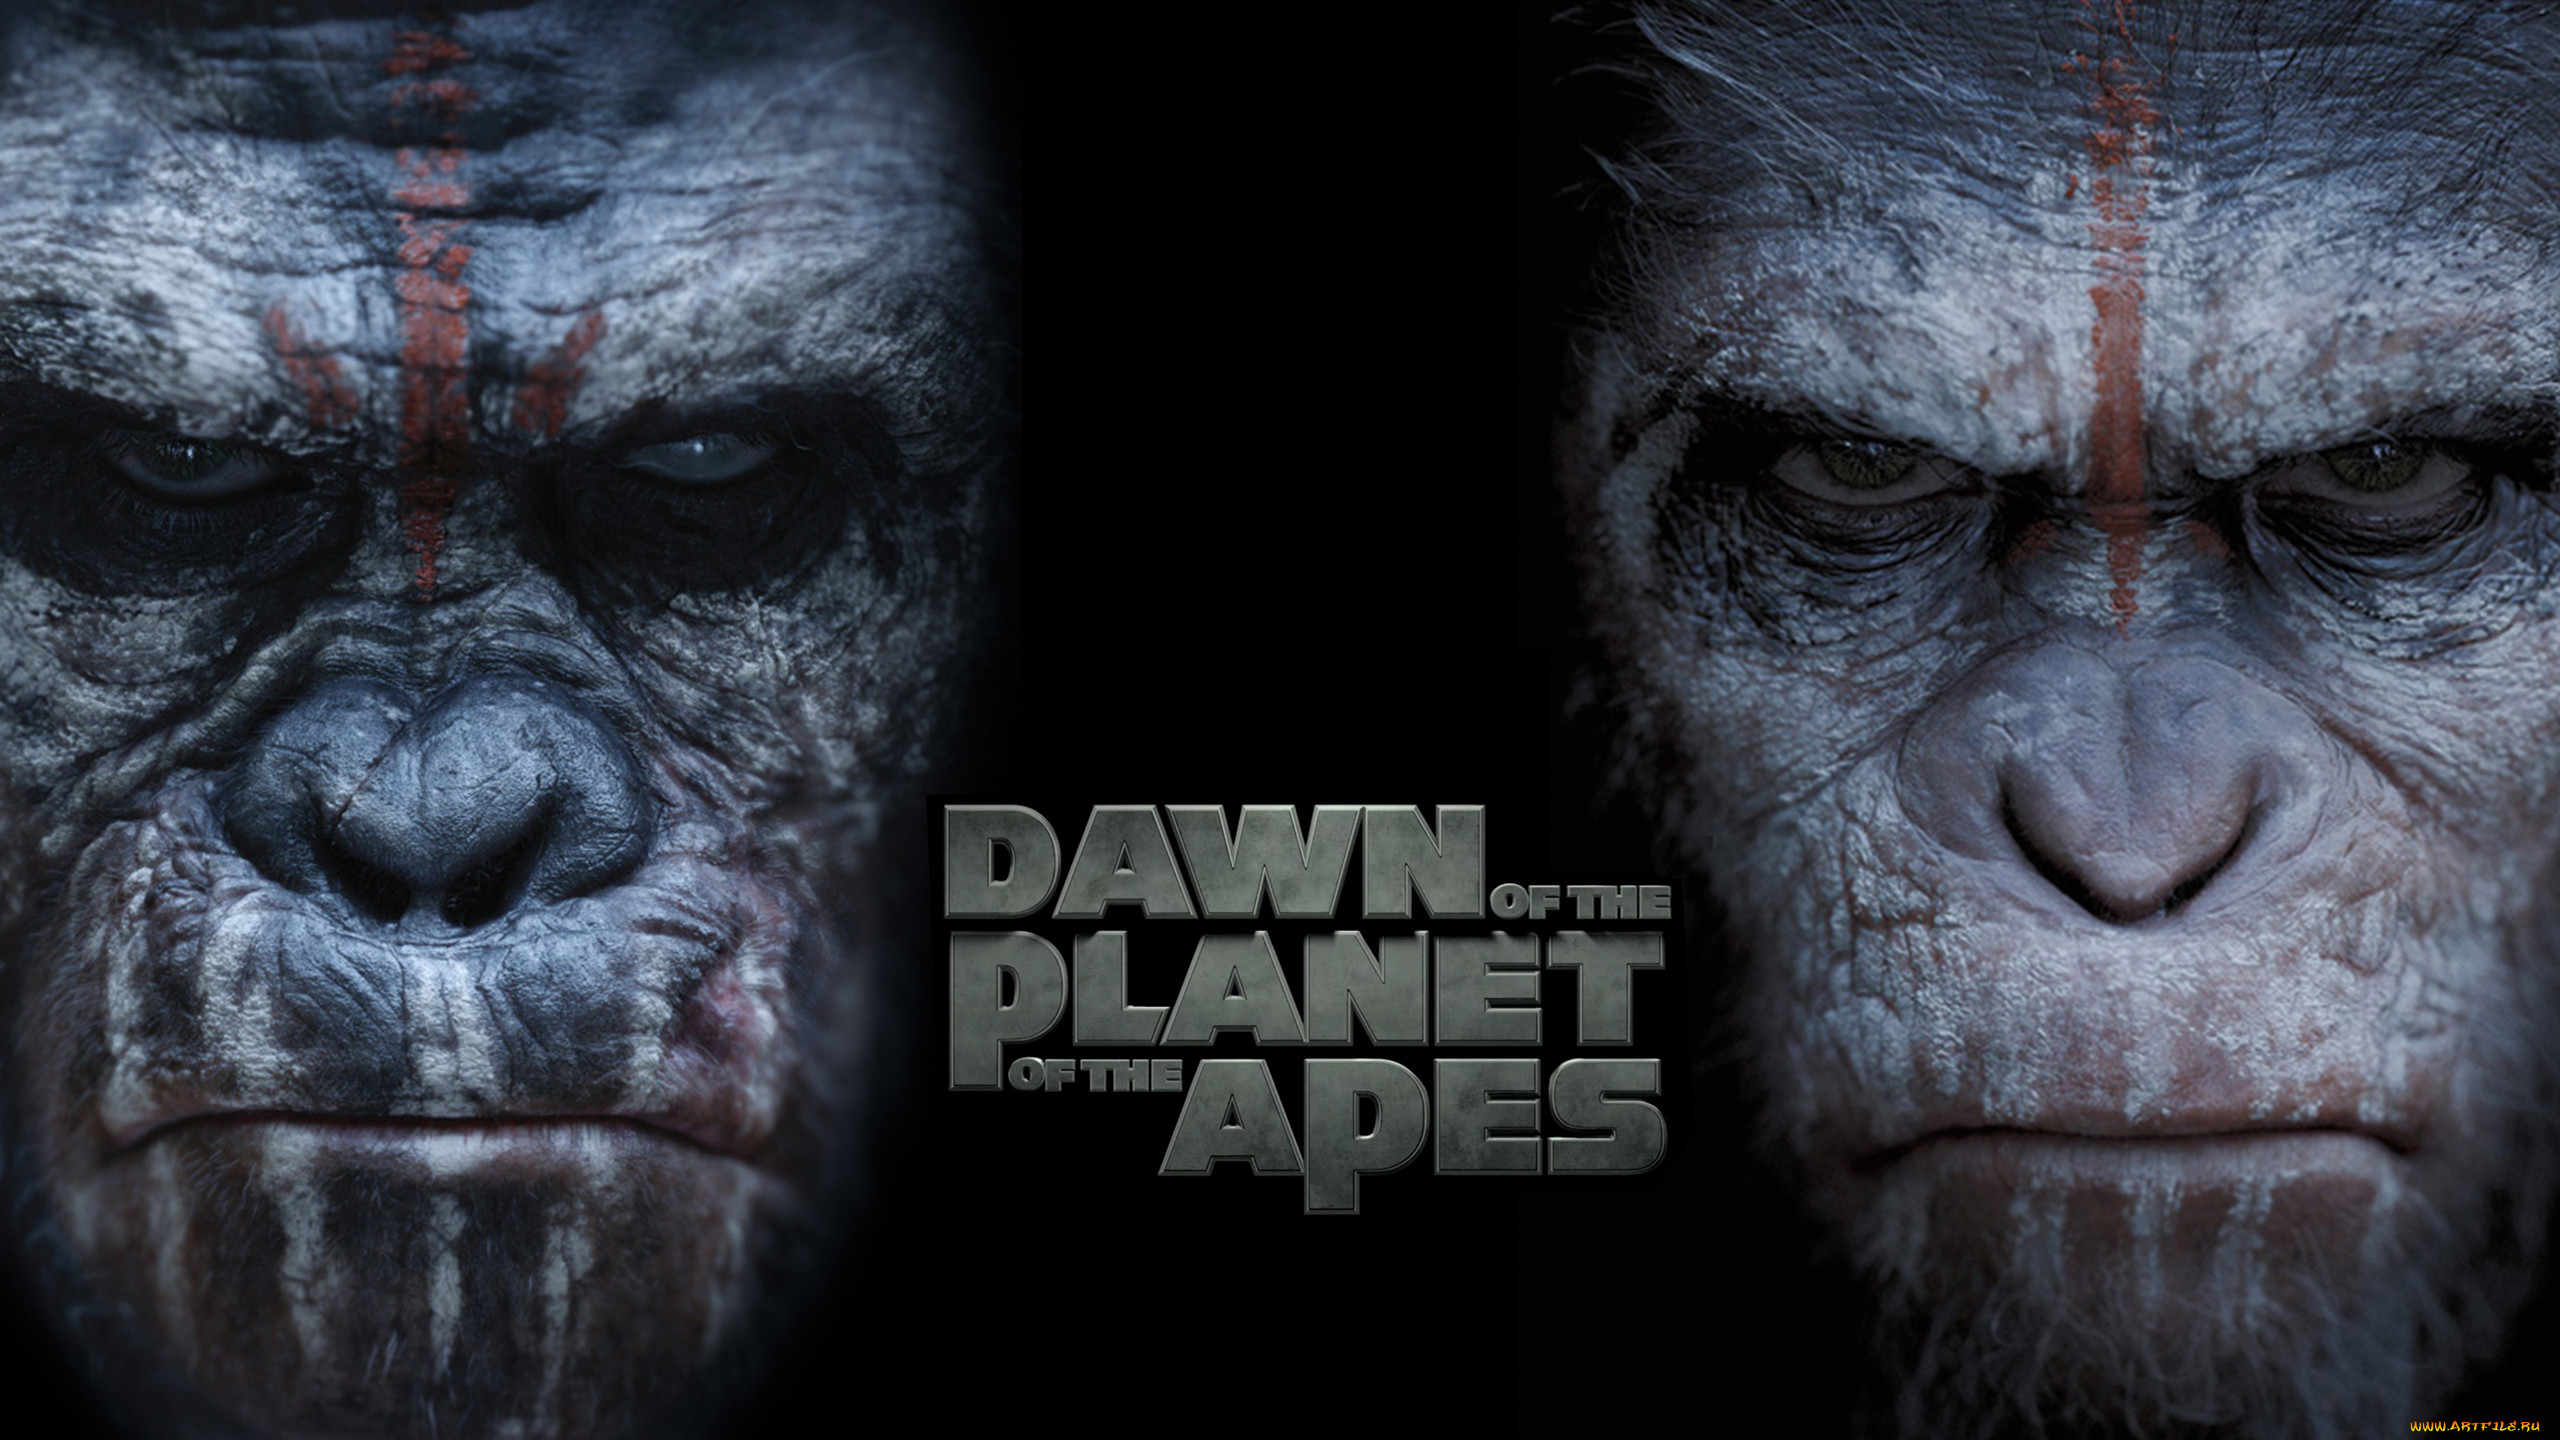 Планета обезьян: Революция (Dawn of the Planet of the Apes) - трейлер.